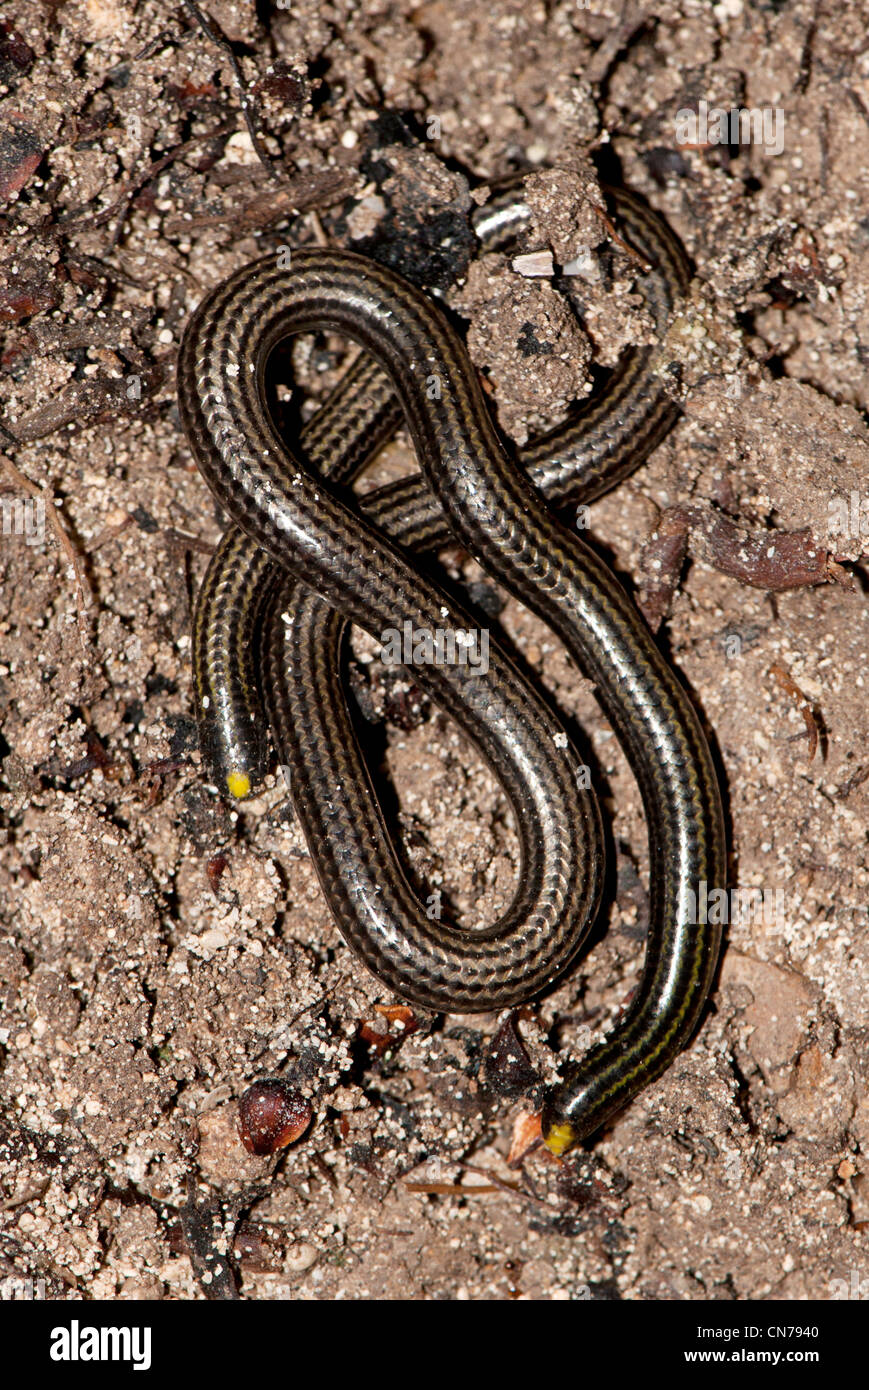 Leptotyphlops goudotii, or the black blind snake Stock Photo